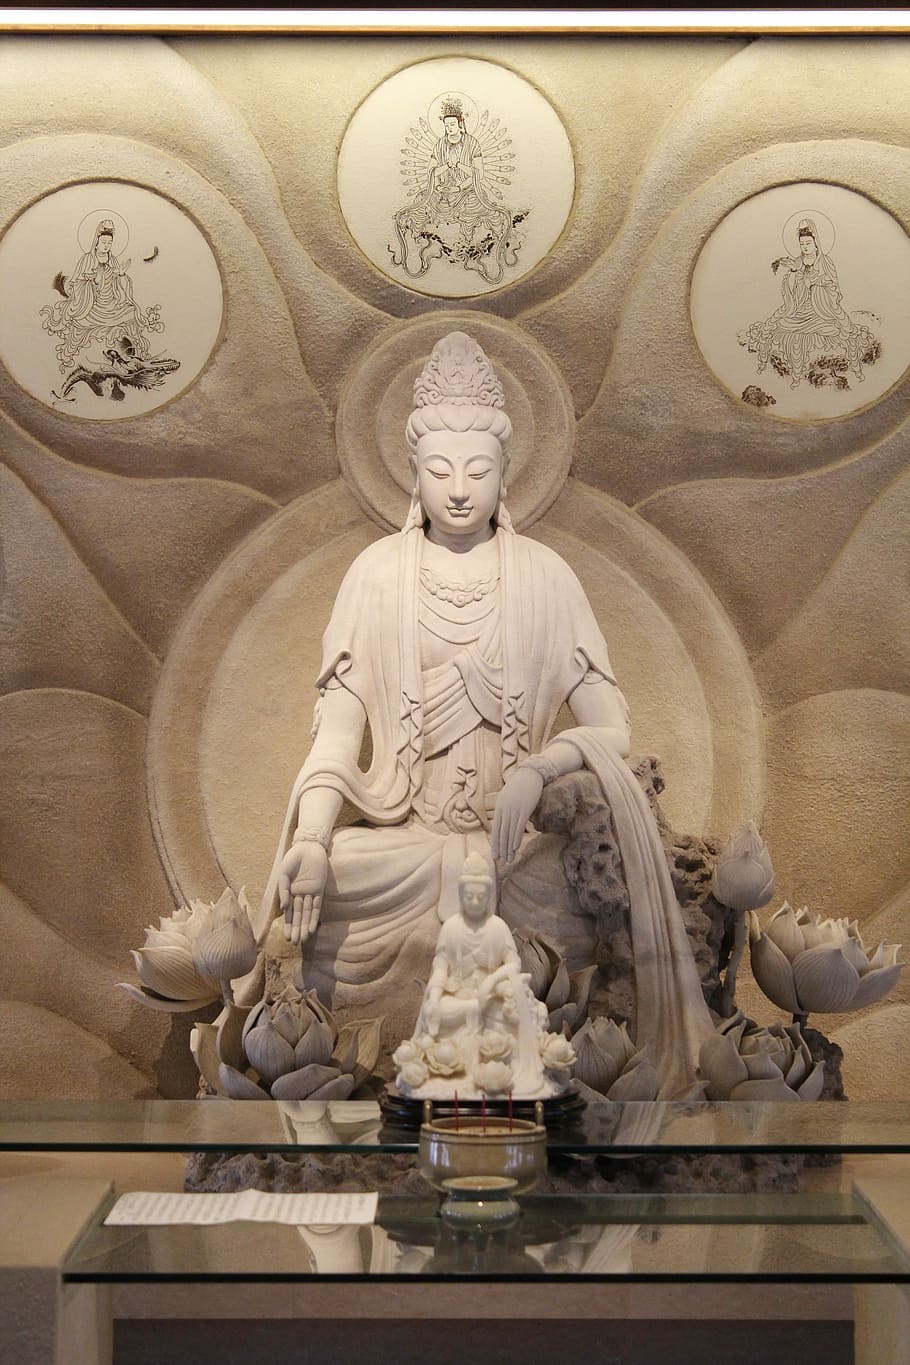 Guanyin, Buddhism, Buddha, Religion, statue, sculpture, history